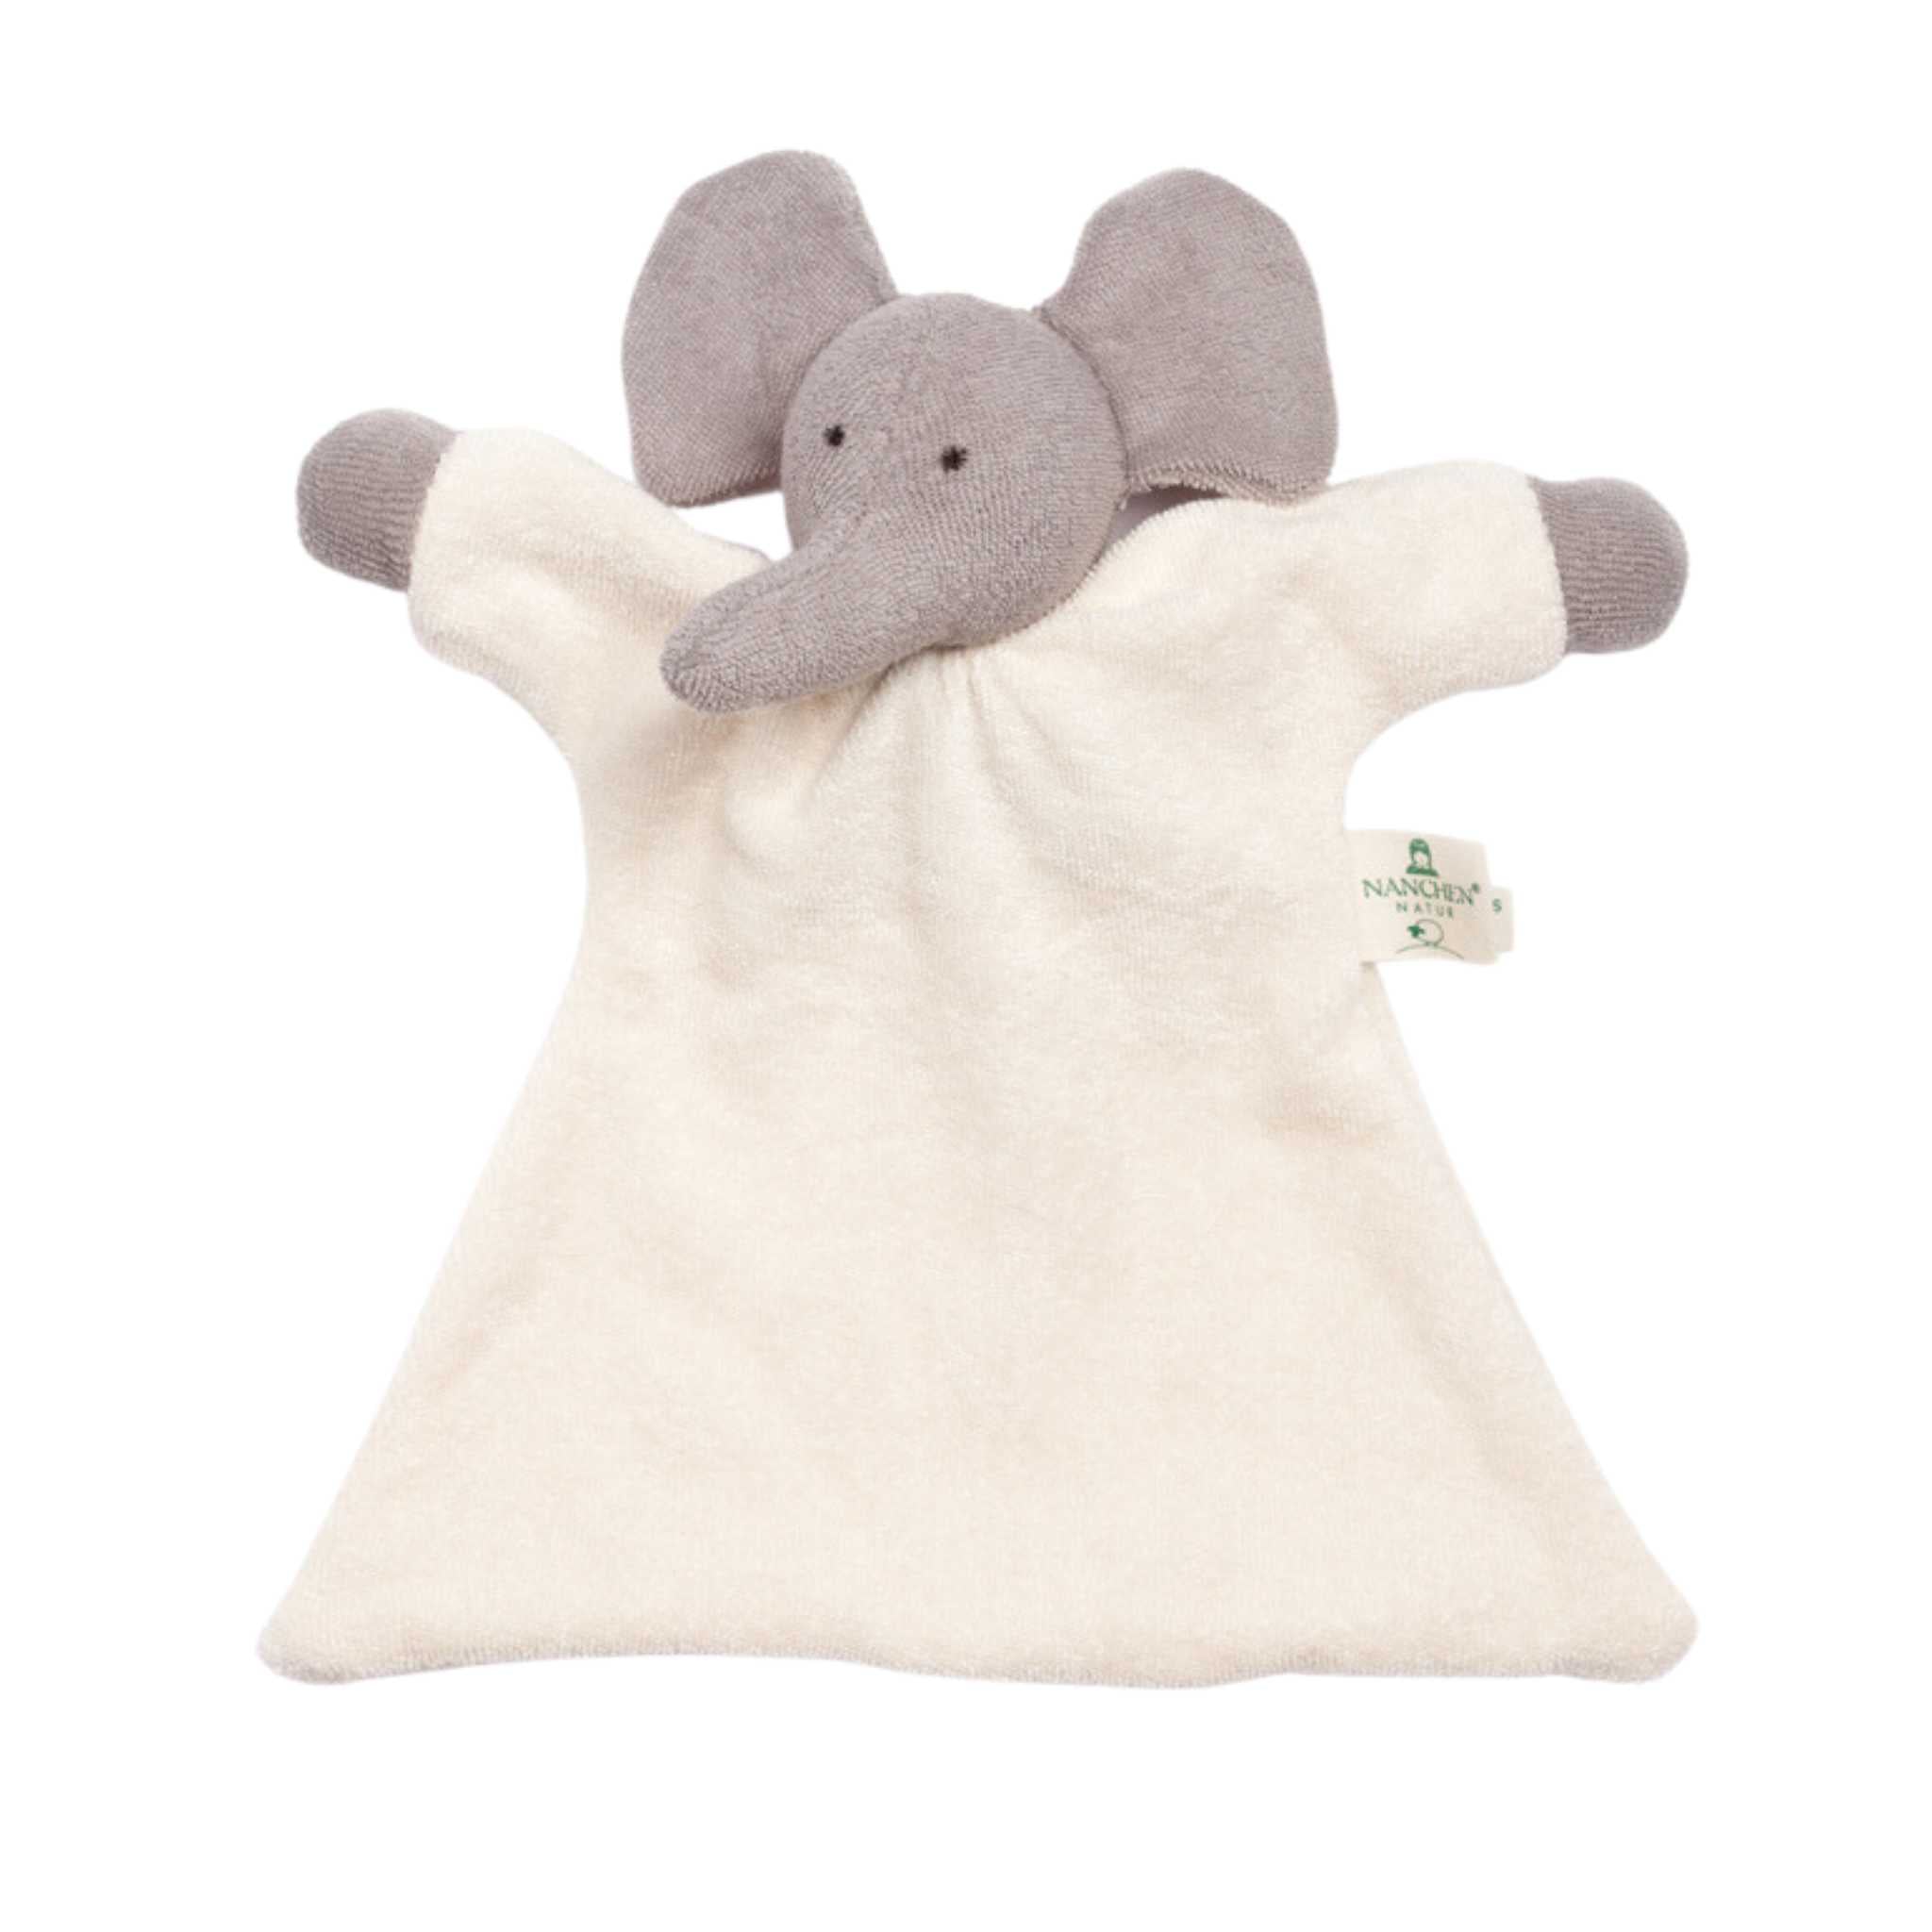 Nanchen Natur Soft Terry Comforter Animal Elephant